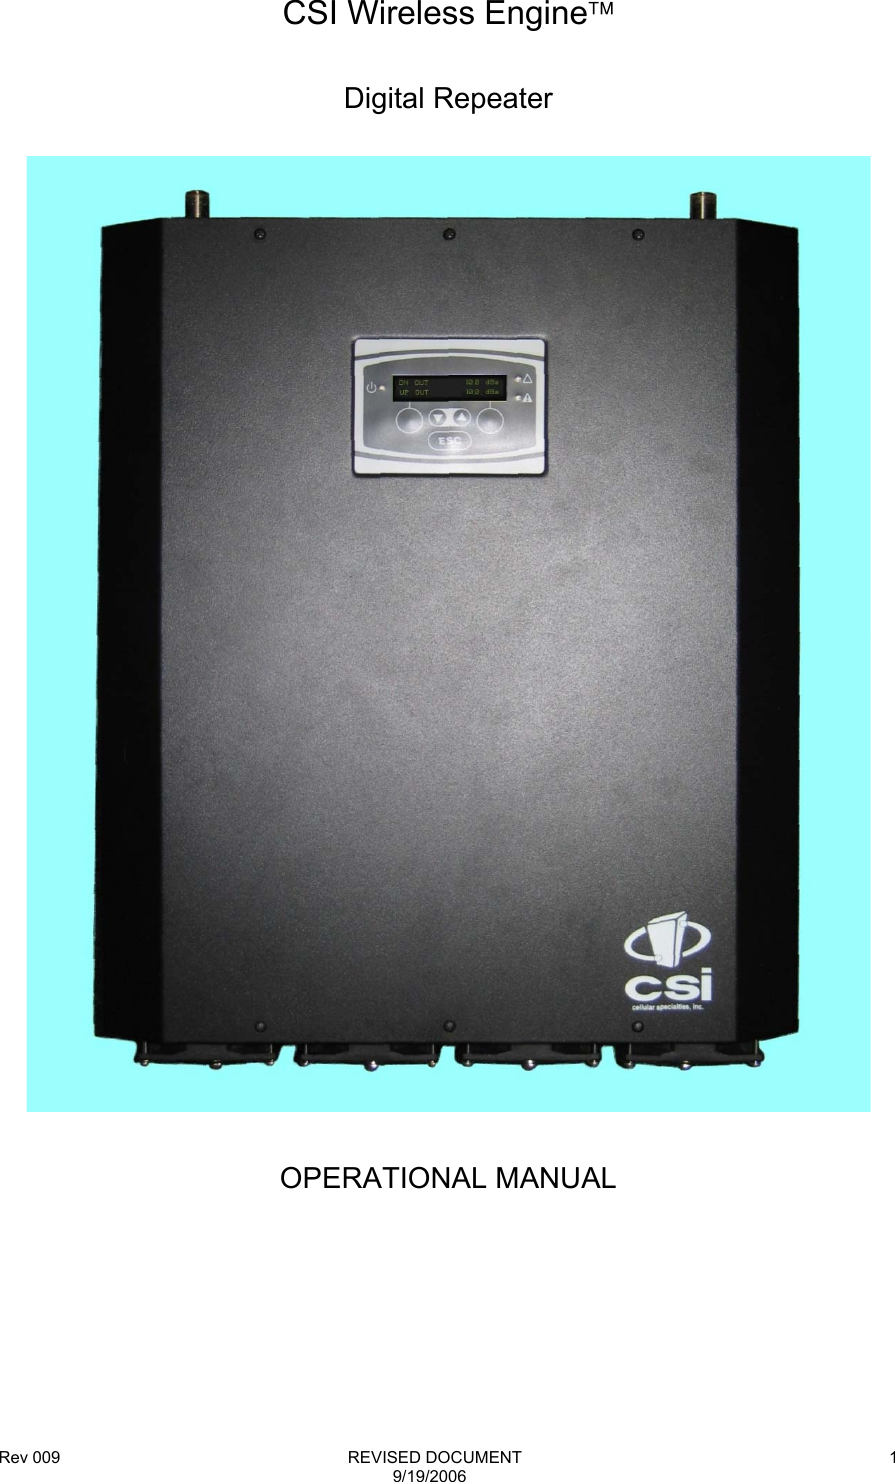 Rev 009                                                              REVISED DOCUMENT 9/19/2006 1 CSI Wireless Engine  Digital Repeater    OPERATIONAL MANUAL 